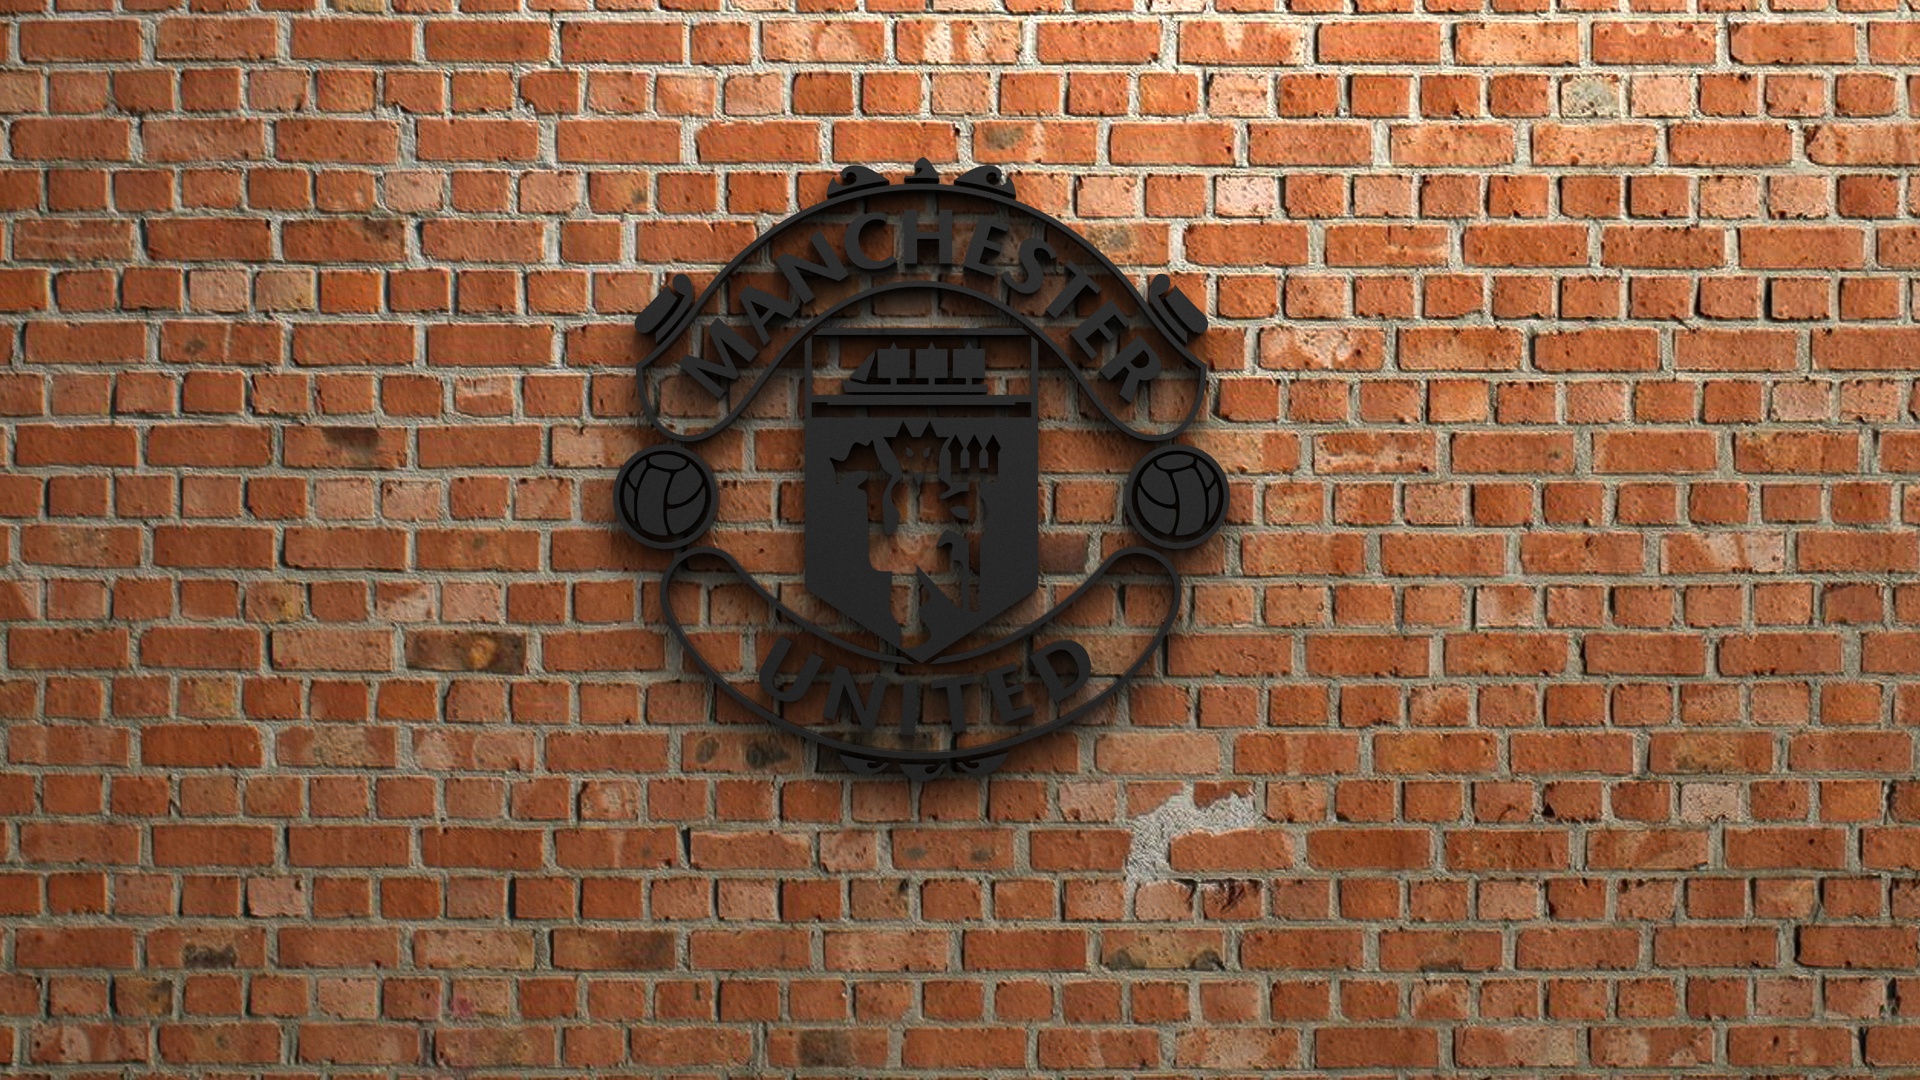 Descarga gratuita de fondo de pantalla para móvil de Fútbol, Logo, Emblema, Deporte, Manchester United F C.